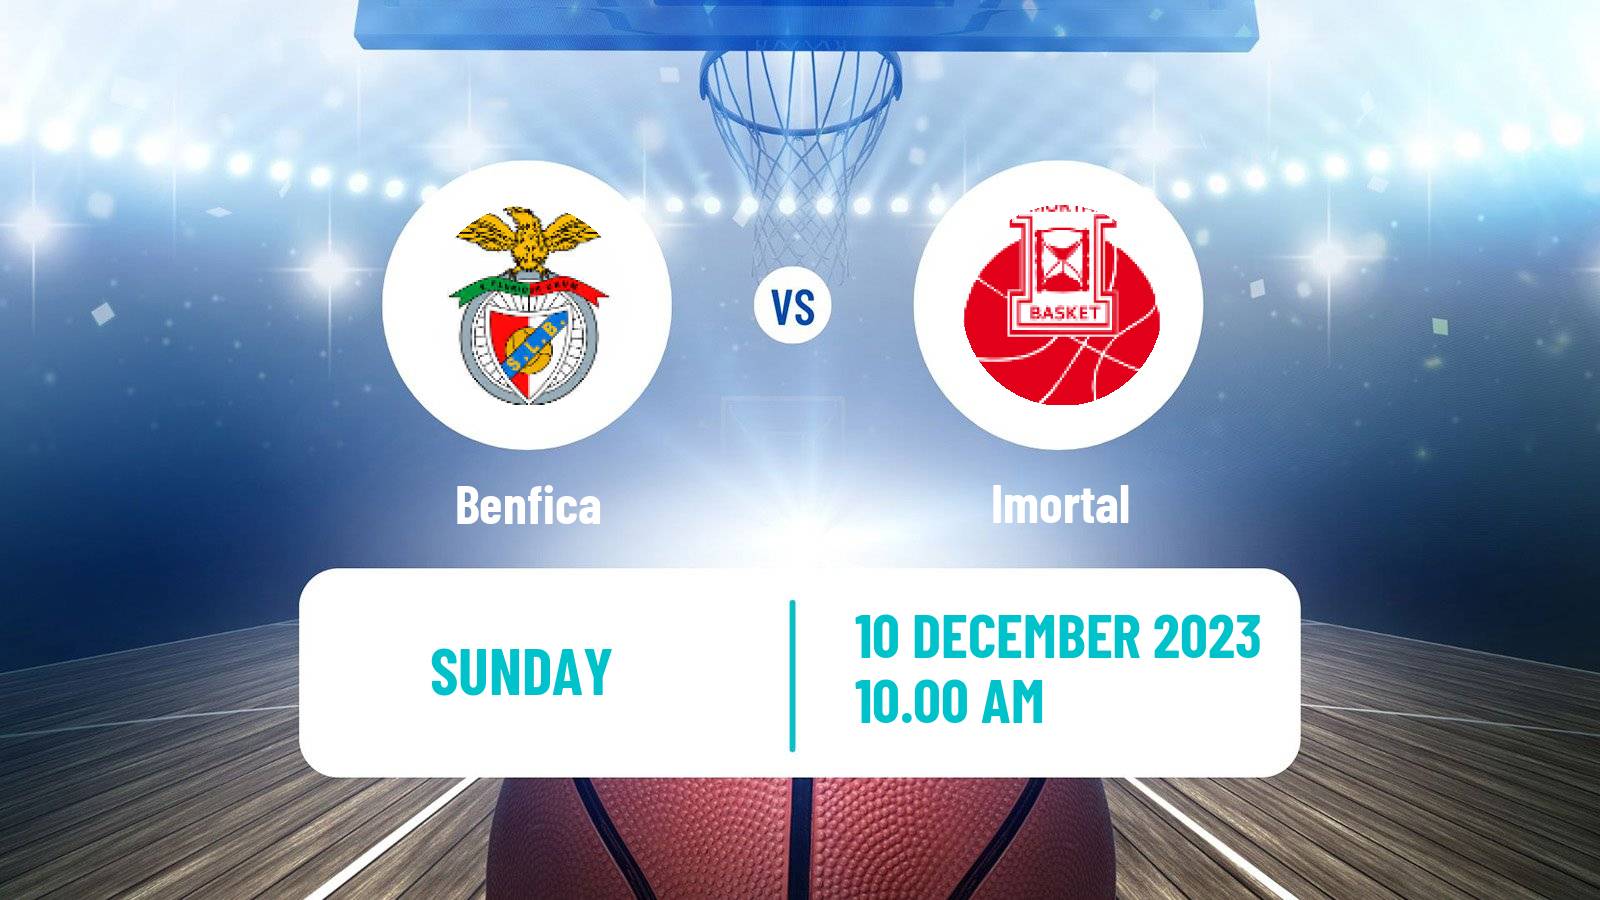 Basketball Portuguese LFB Benfica - Imortal